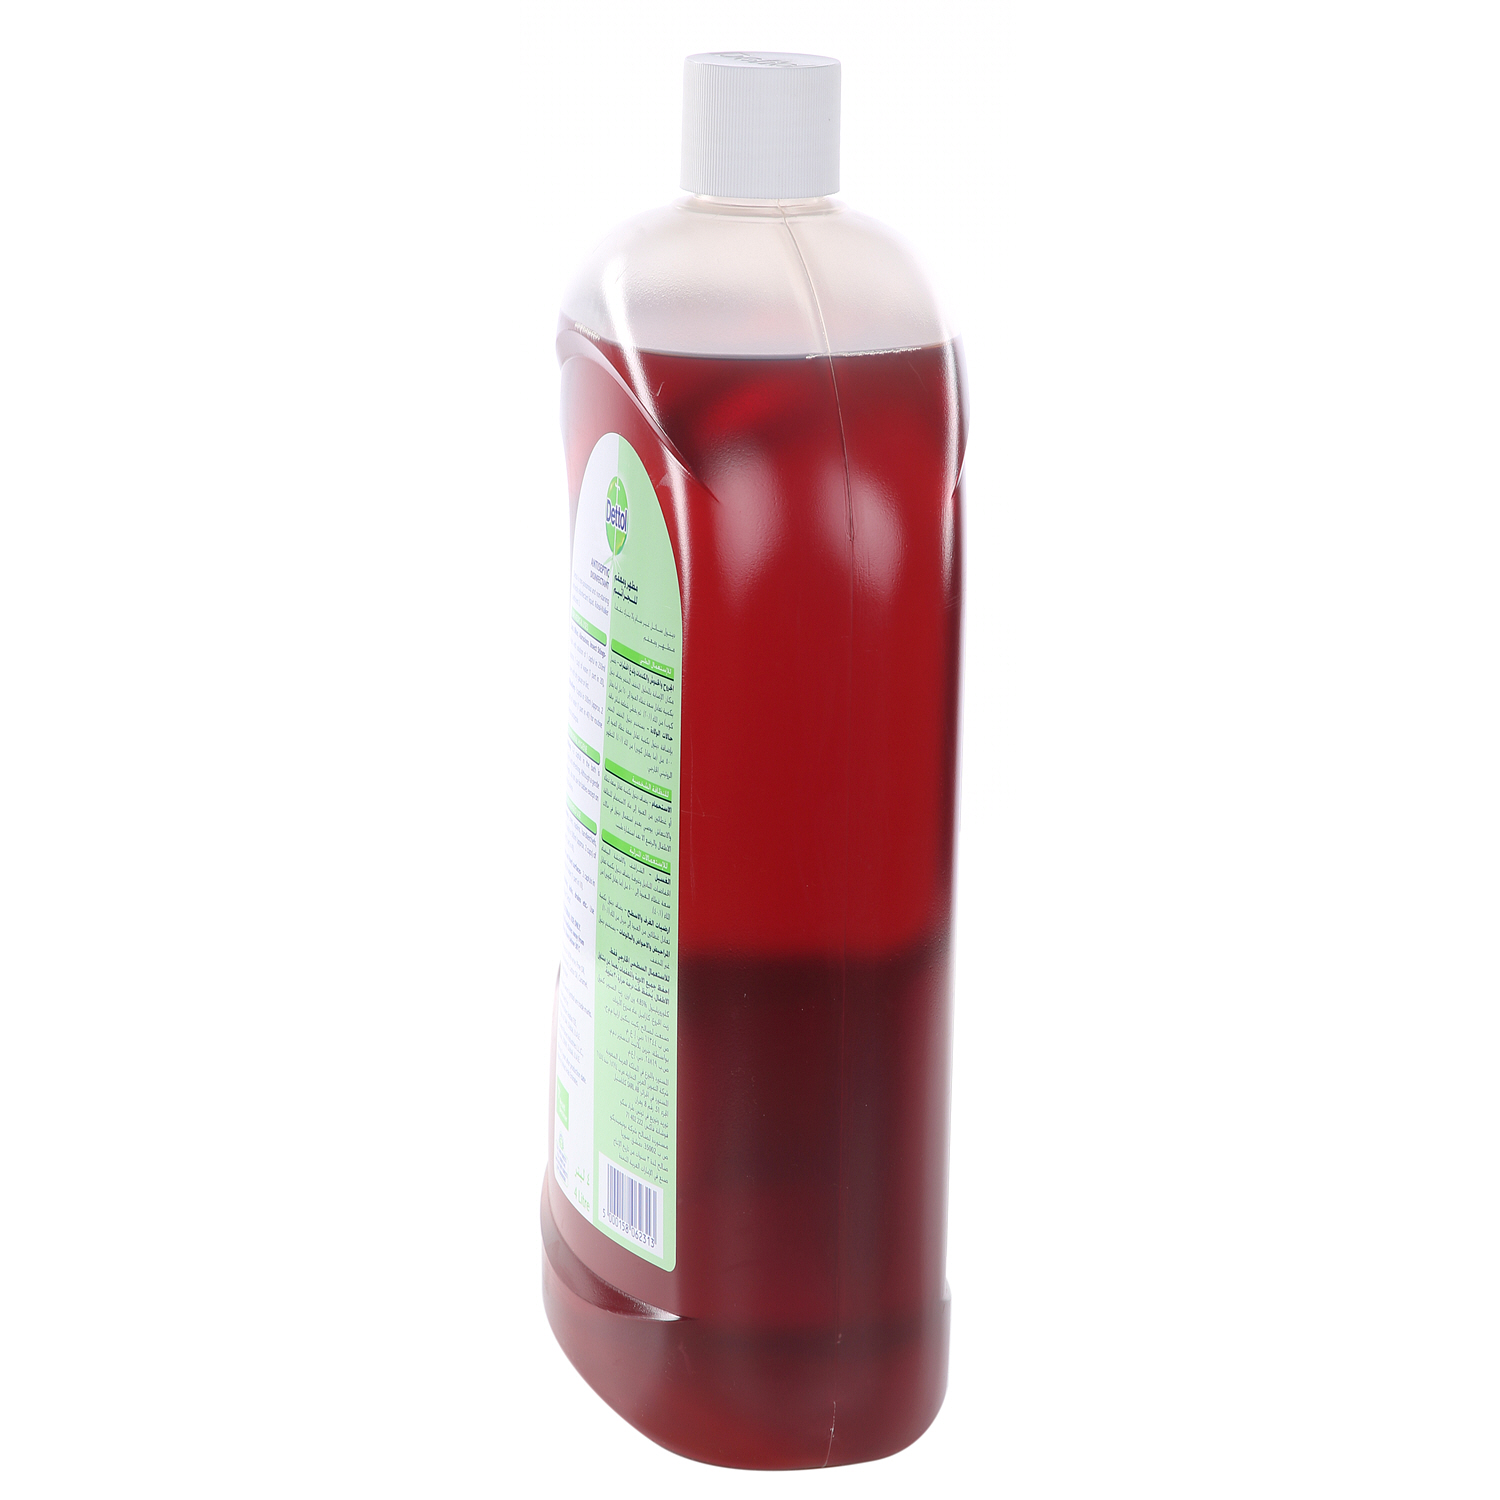 Dettol Anti-Bacterial Disinfectant Liquid 4 L